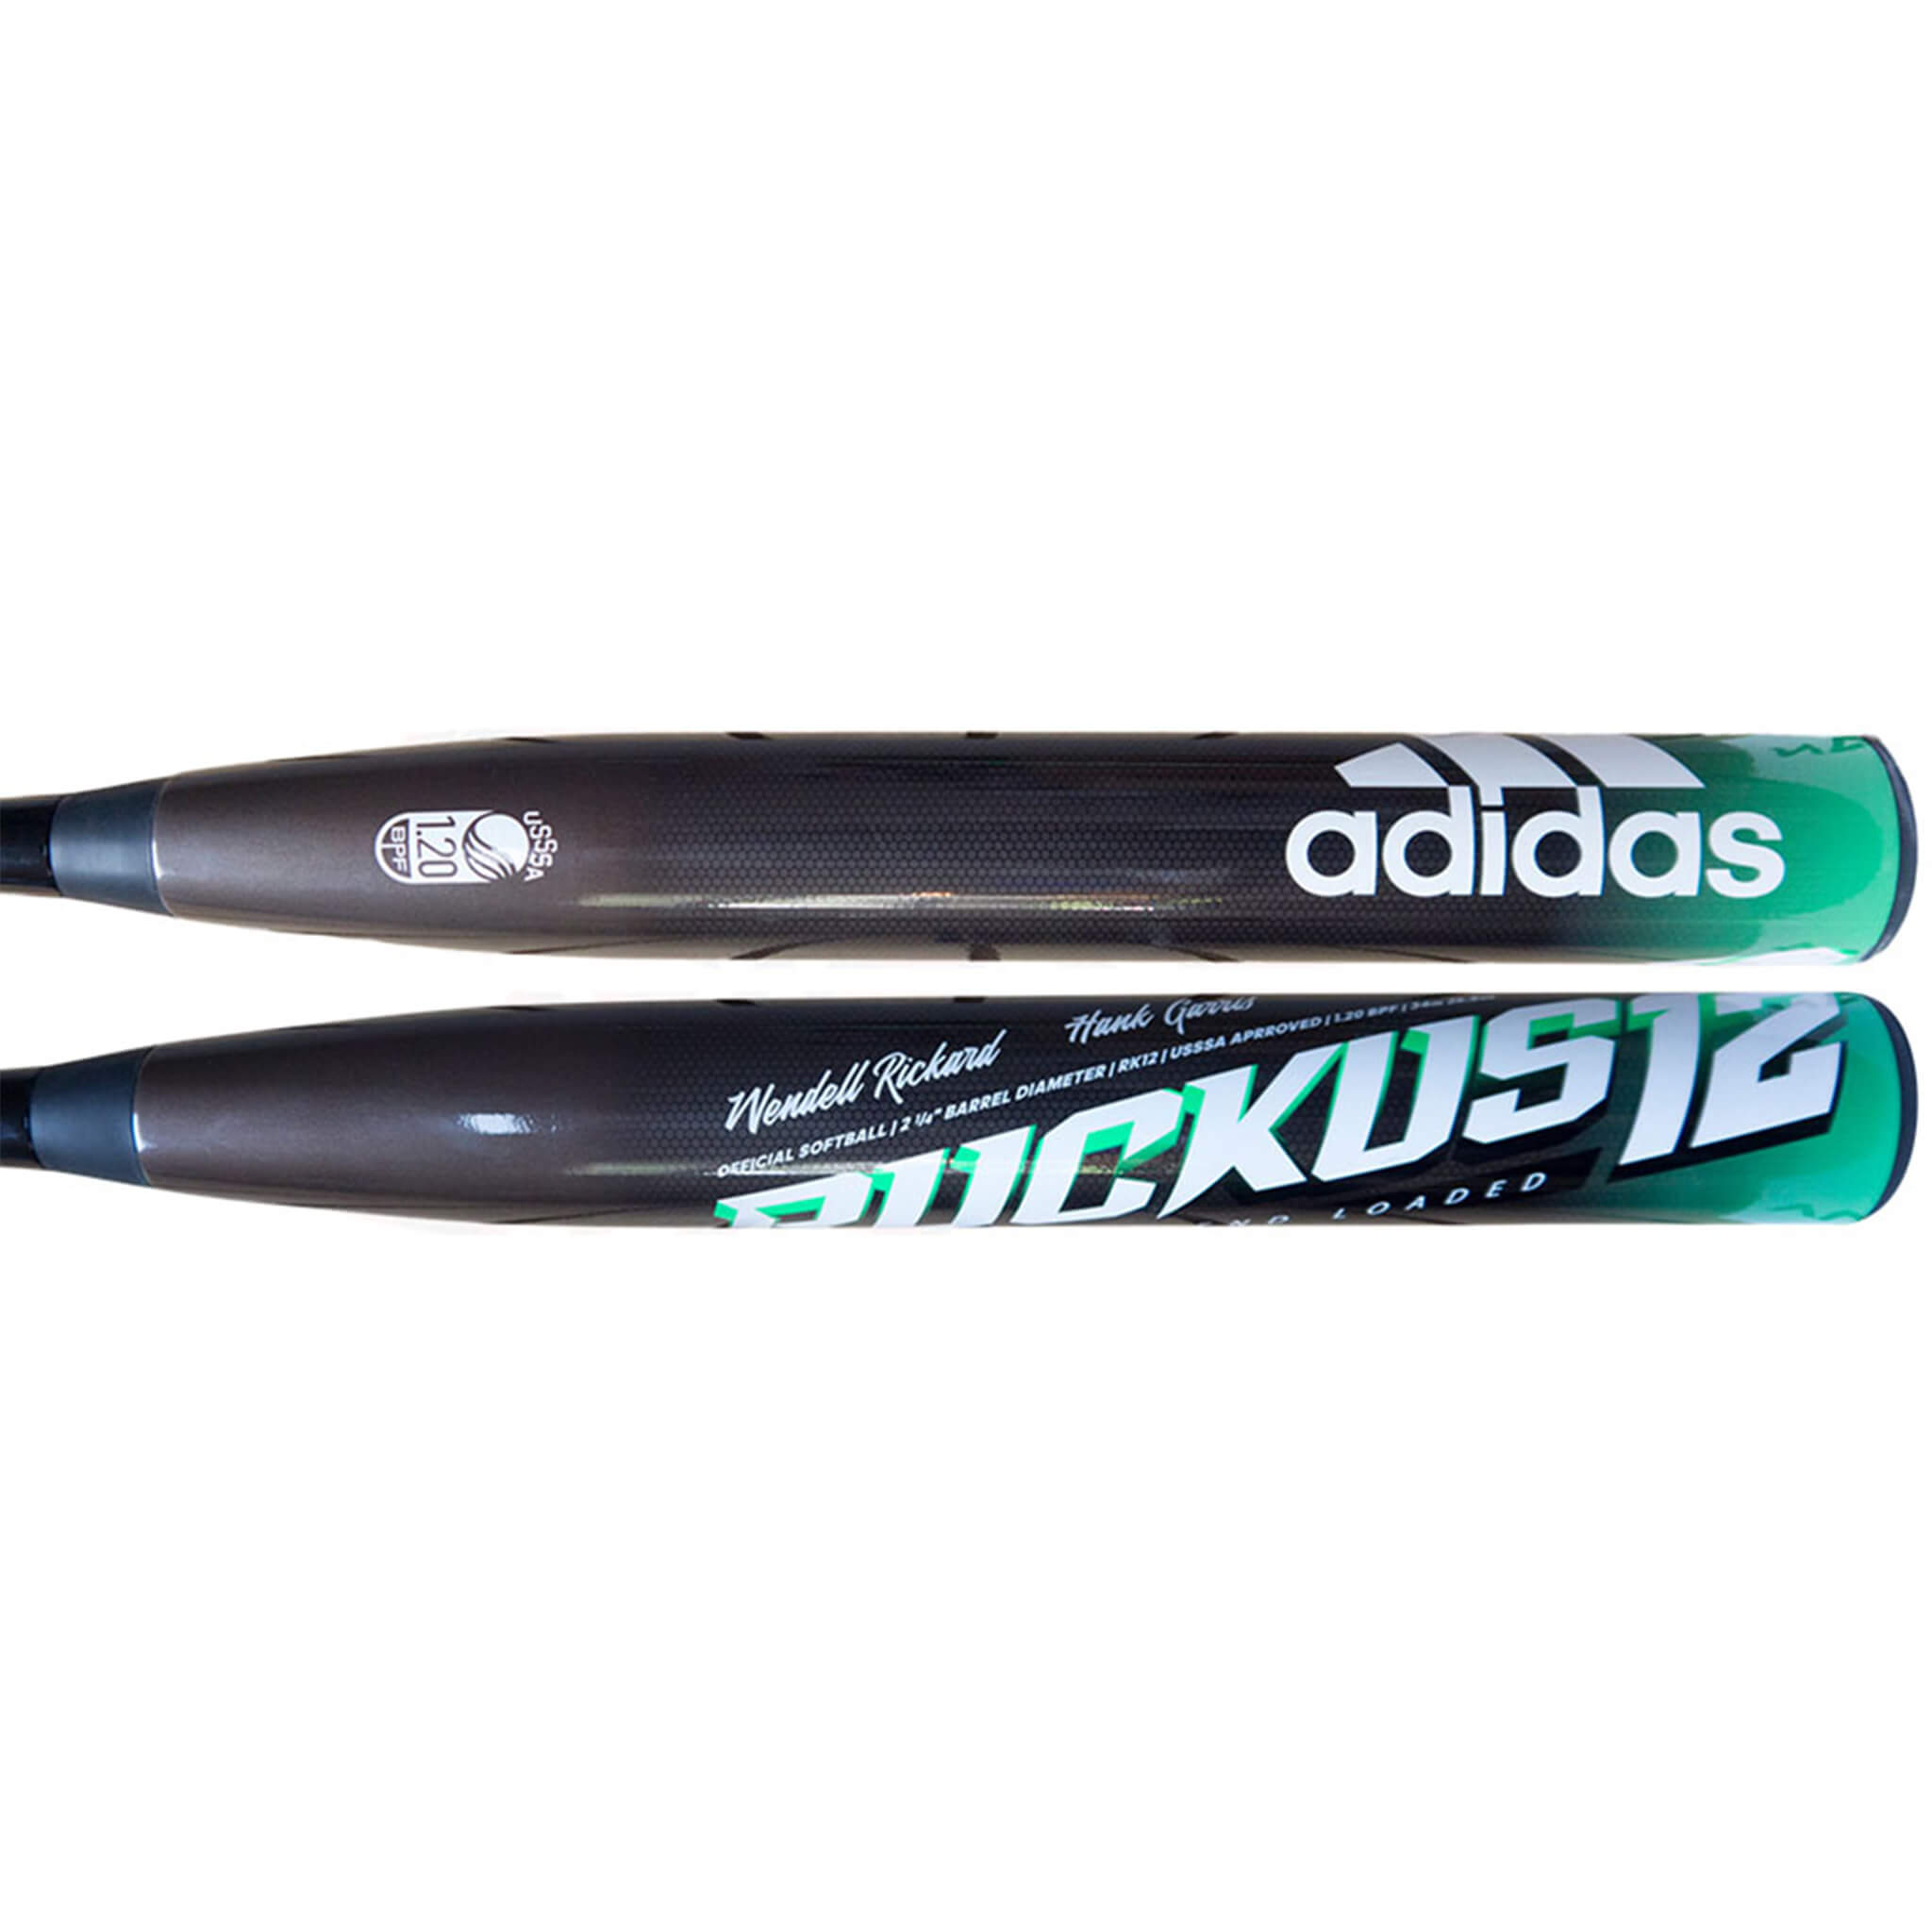 Adidas Ruckus Softball Bat 2-pc 12" End Load - No Warranty - Suncoast Softball